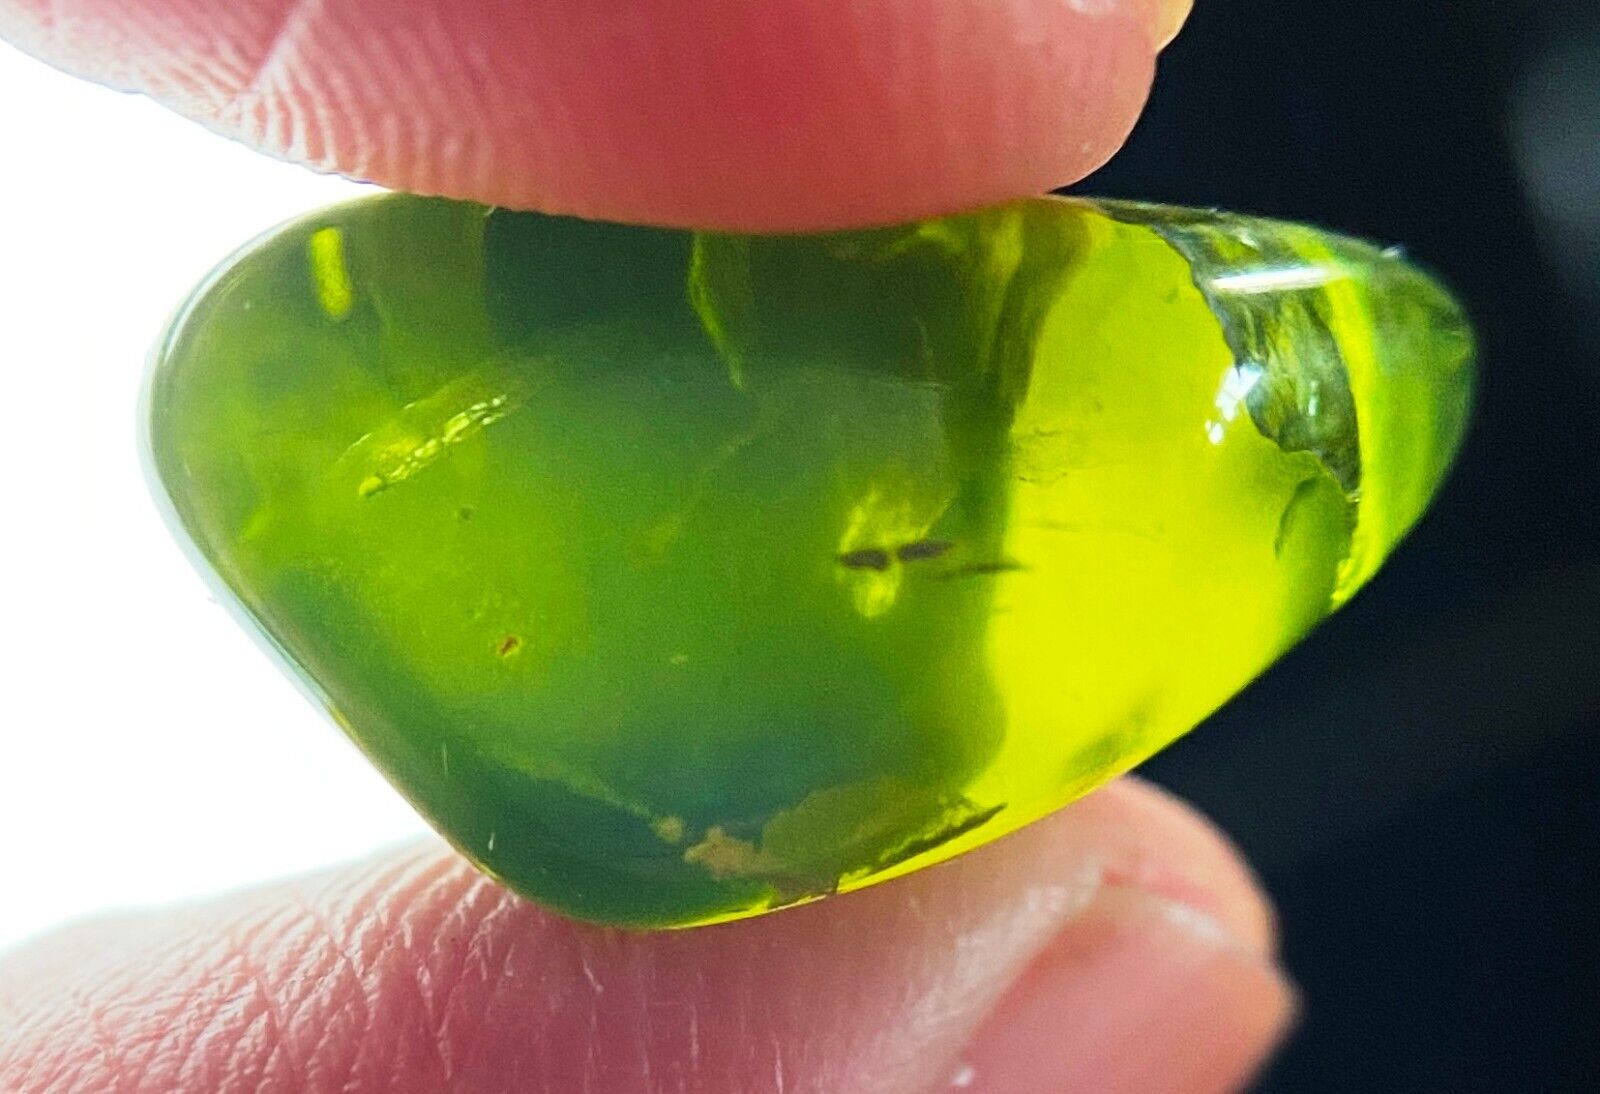 29 carat tumbled Peridot Mesa olivine crystal - forsterite - Arizona facet rough